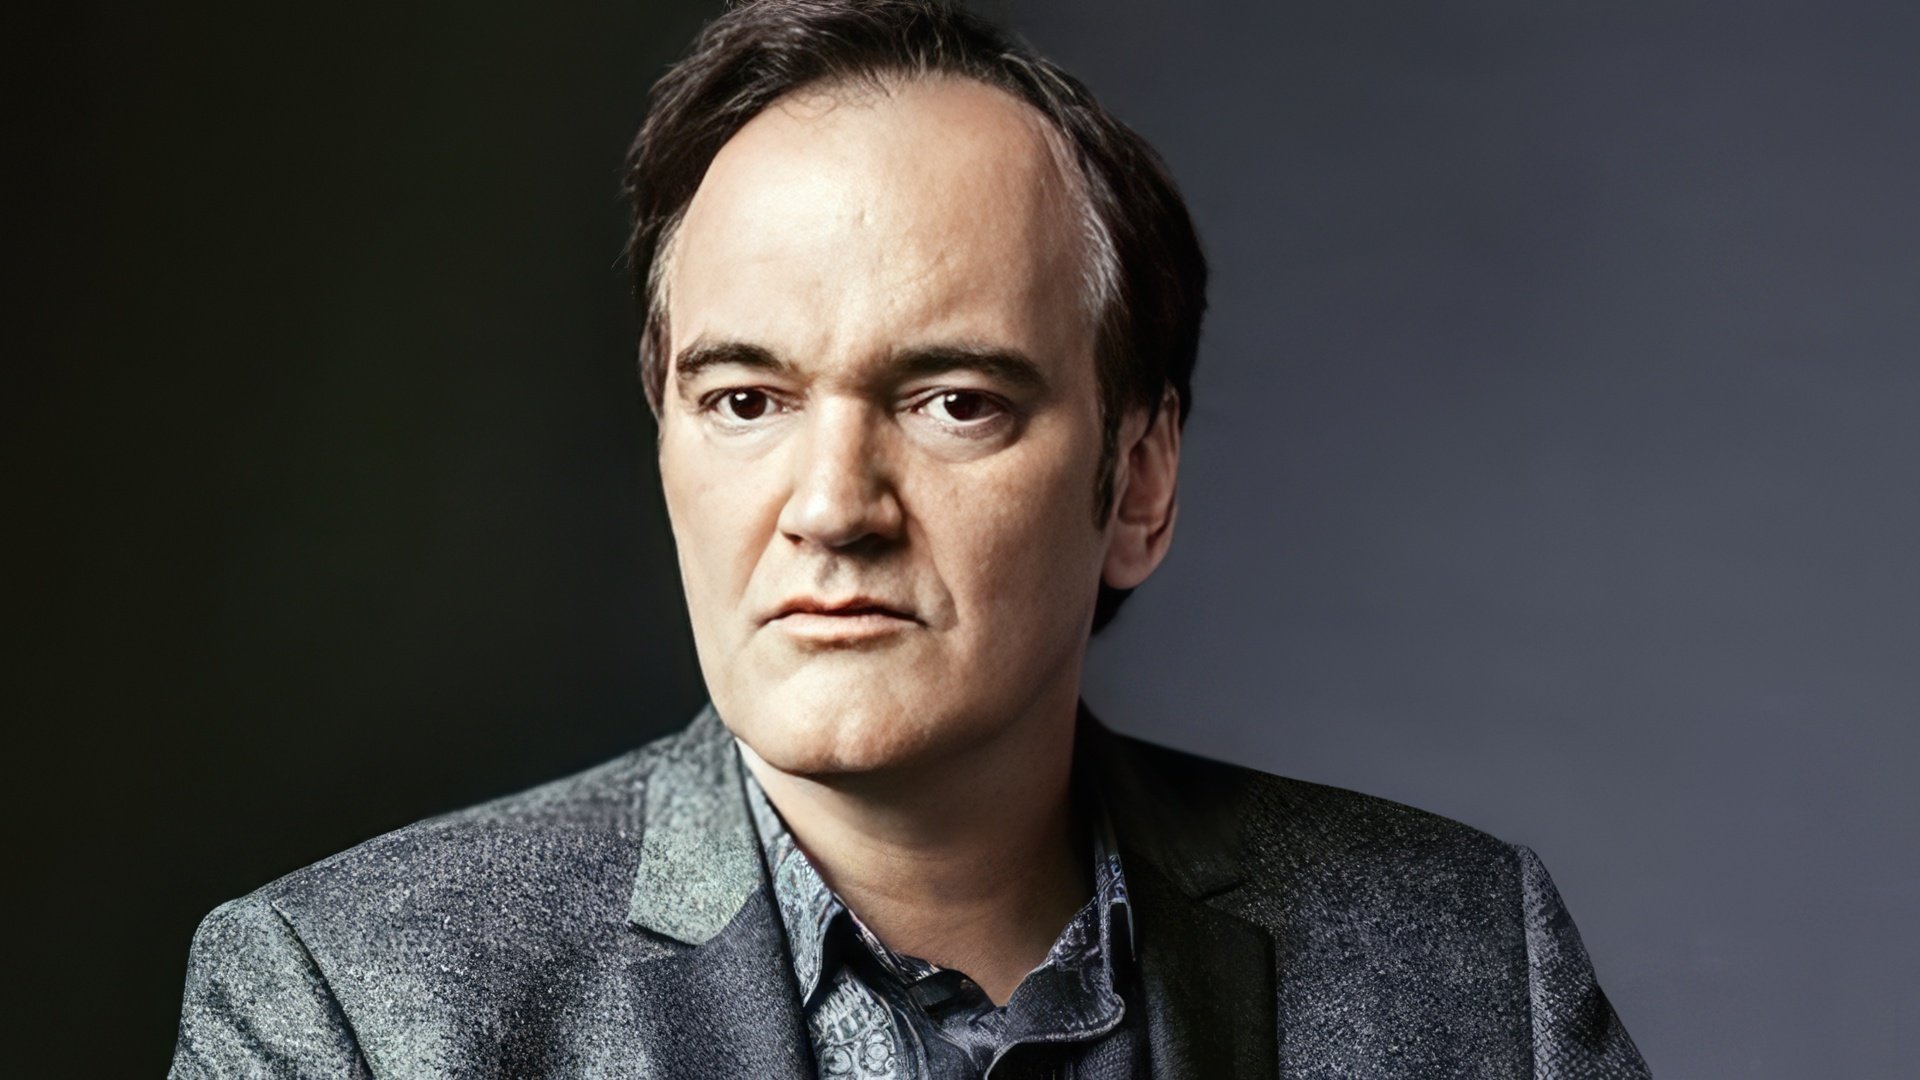 Quentin Tarantino was a confirmed bachelor